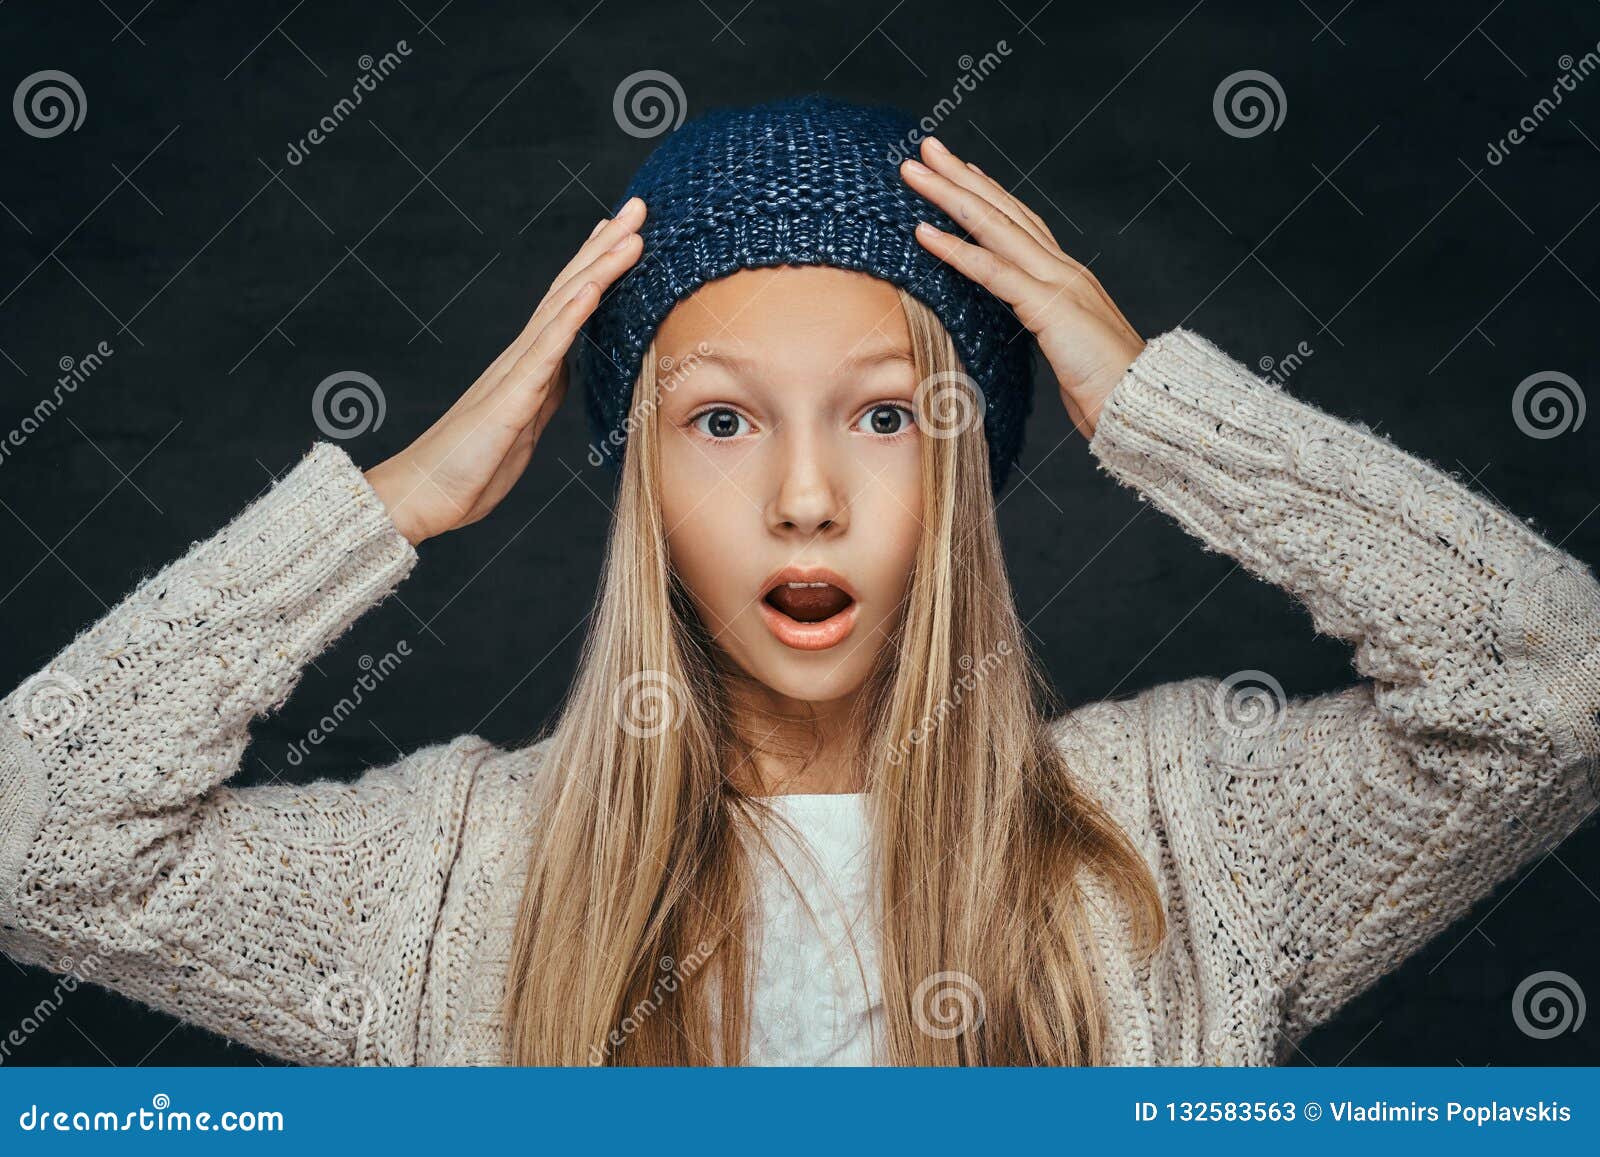 Portrait Of A Surprised Teen Girl With Blonde Hair Weari